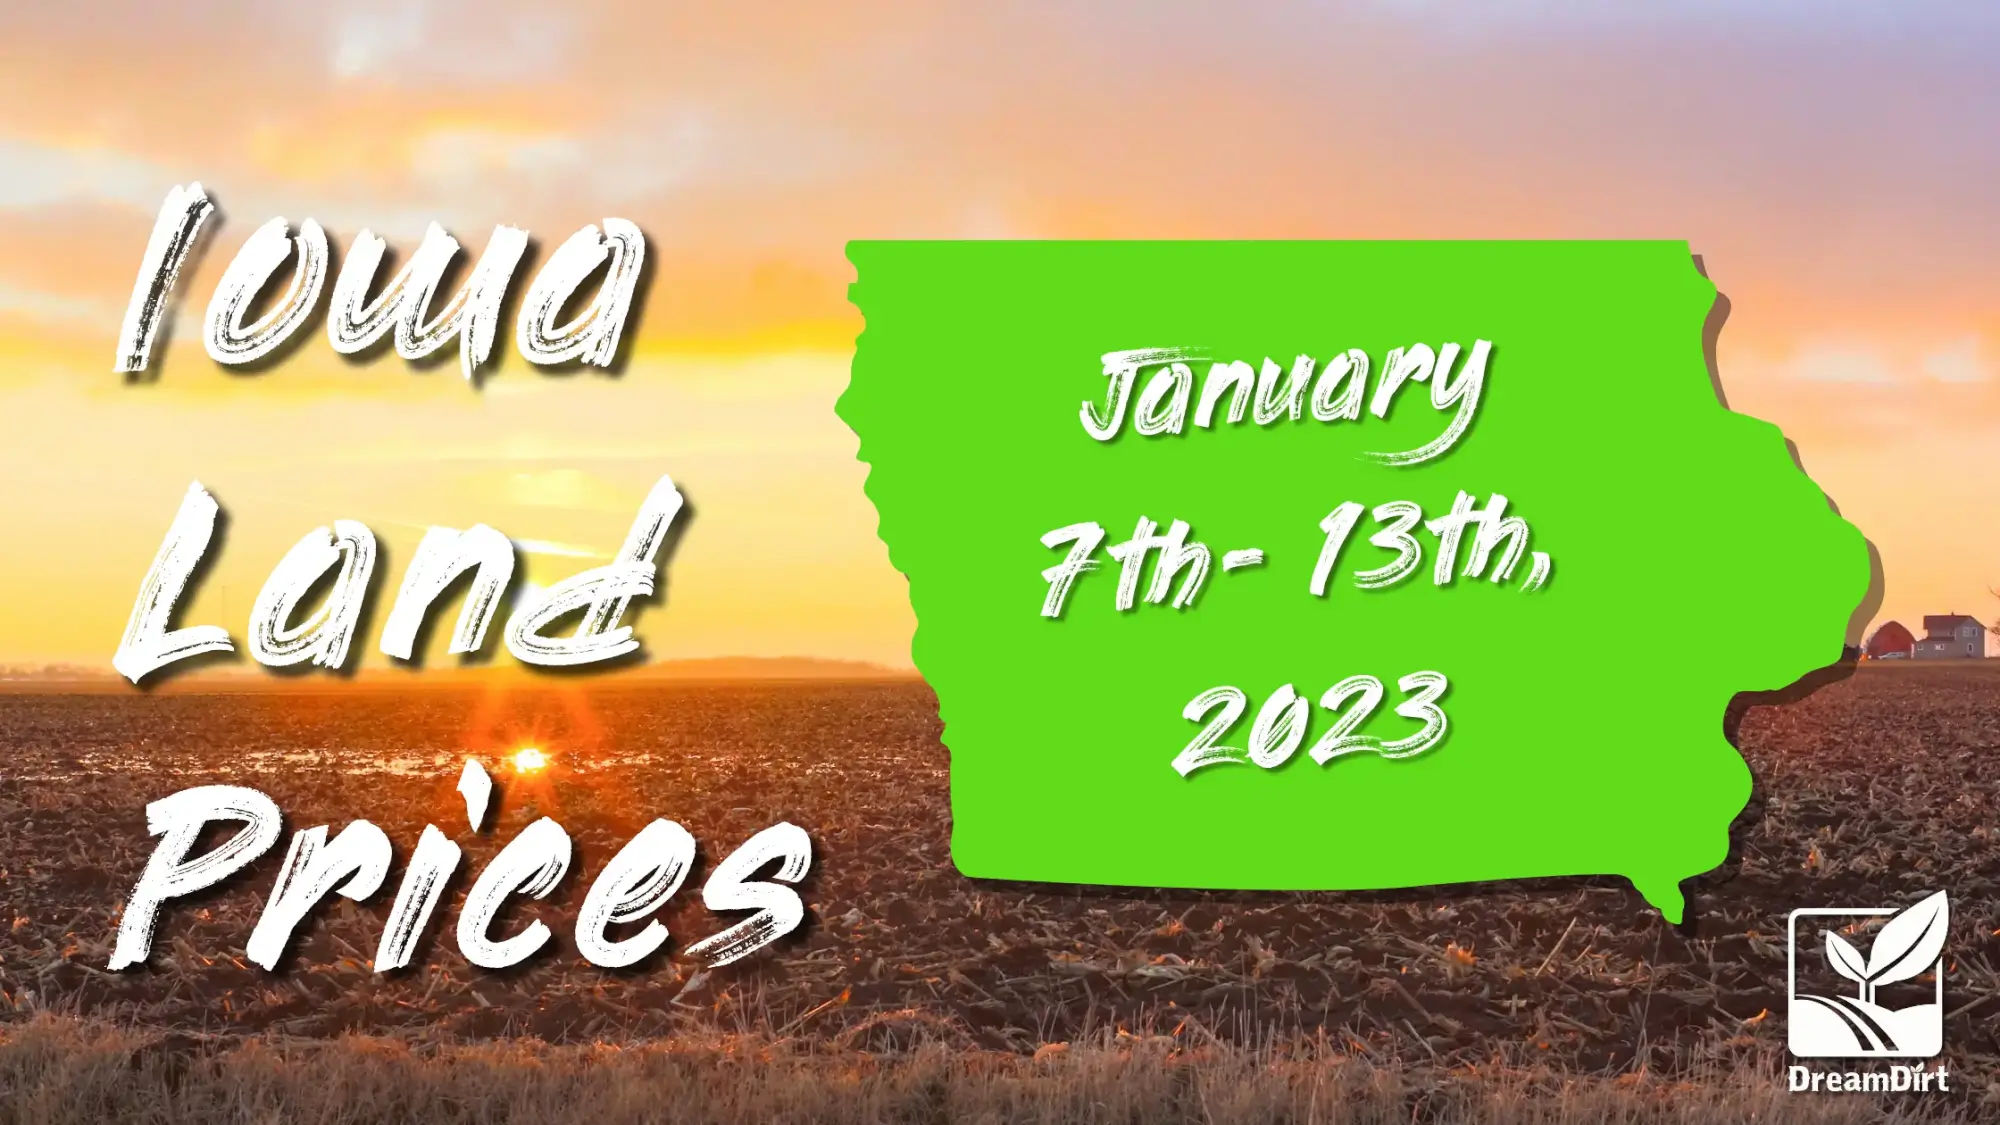 Iowa land prices Jan 7-13th,2023